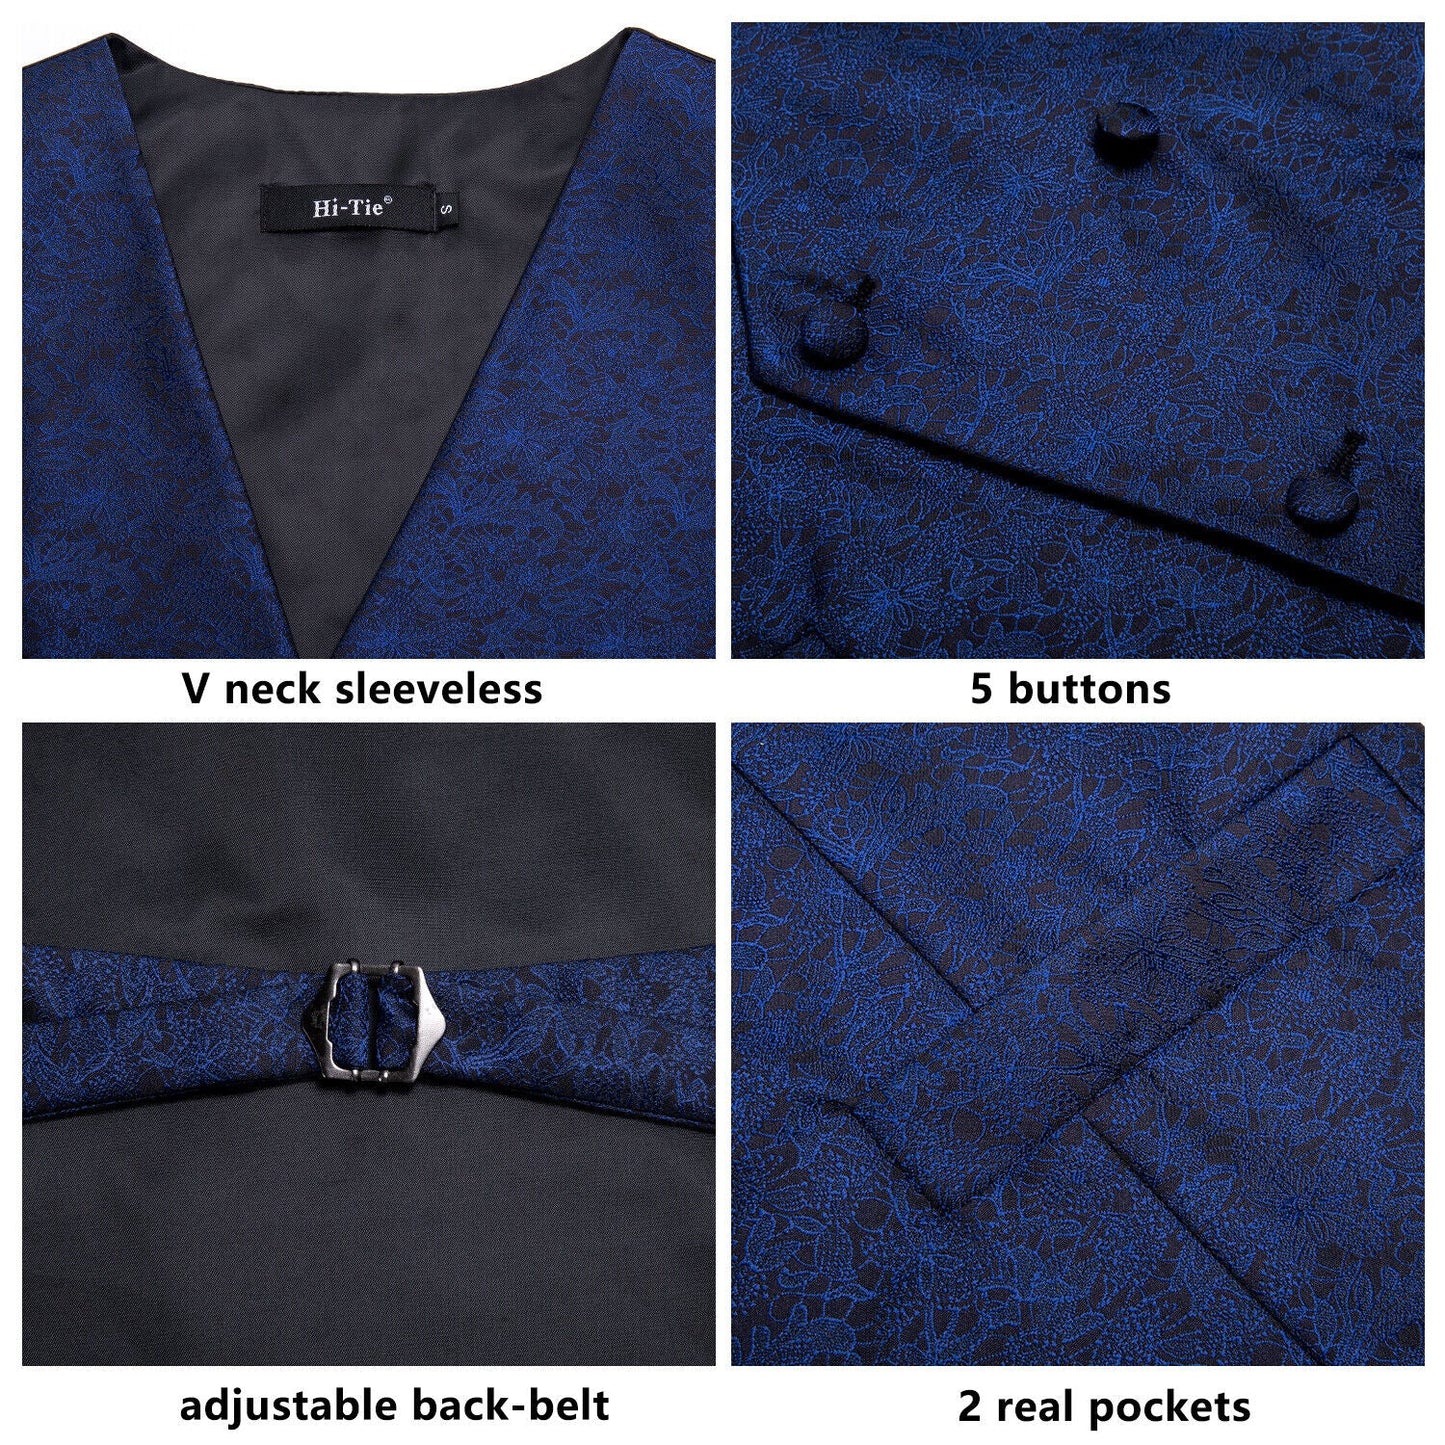 Victorian Waistcoat Novelty Vintage Silky Vest Asymmetric Royal Blue